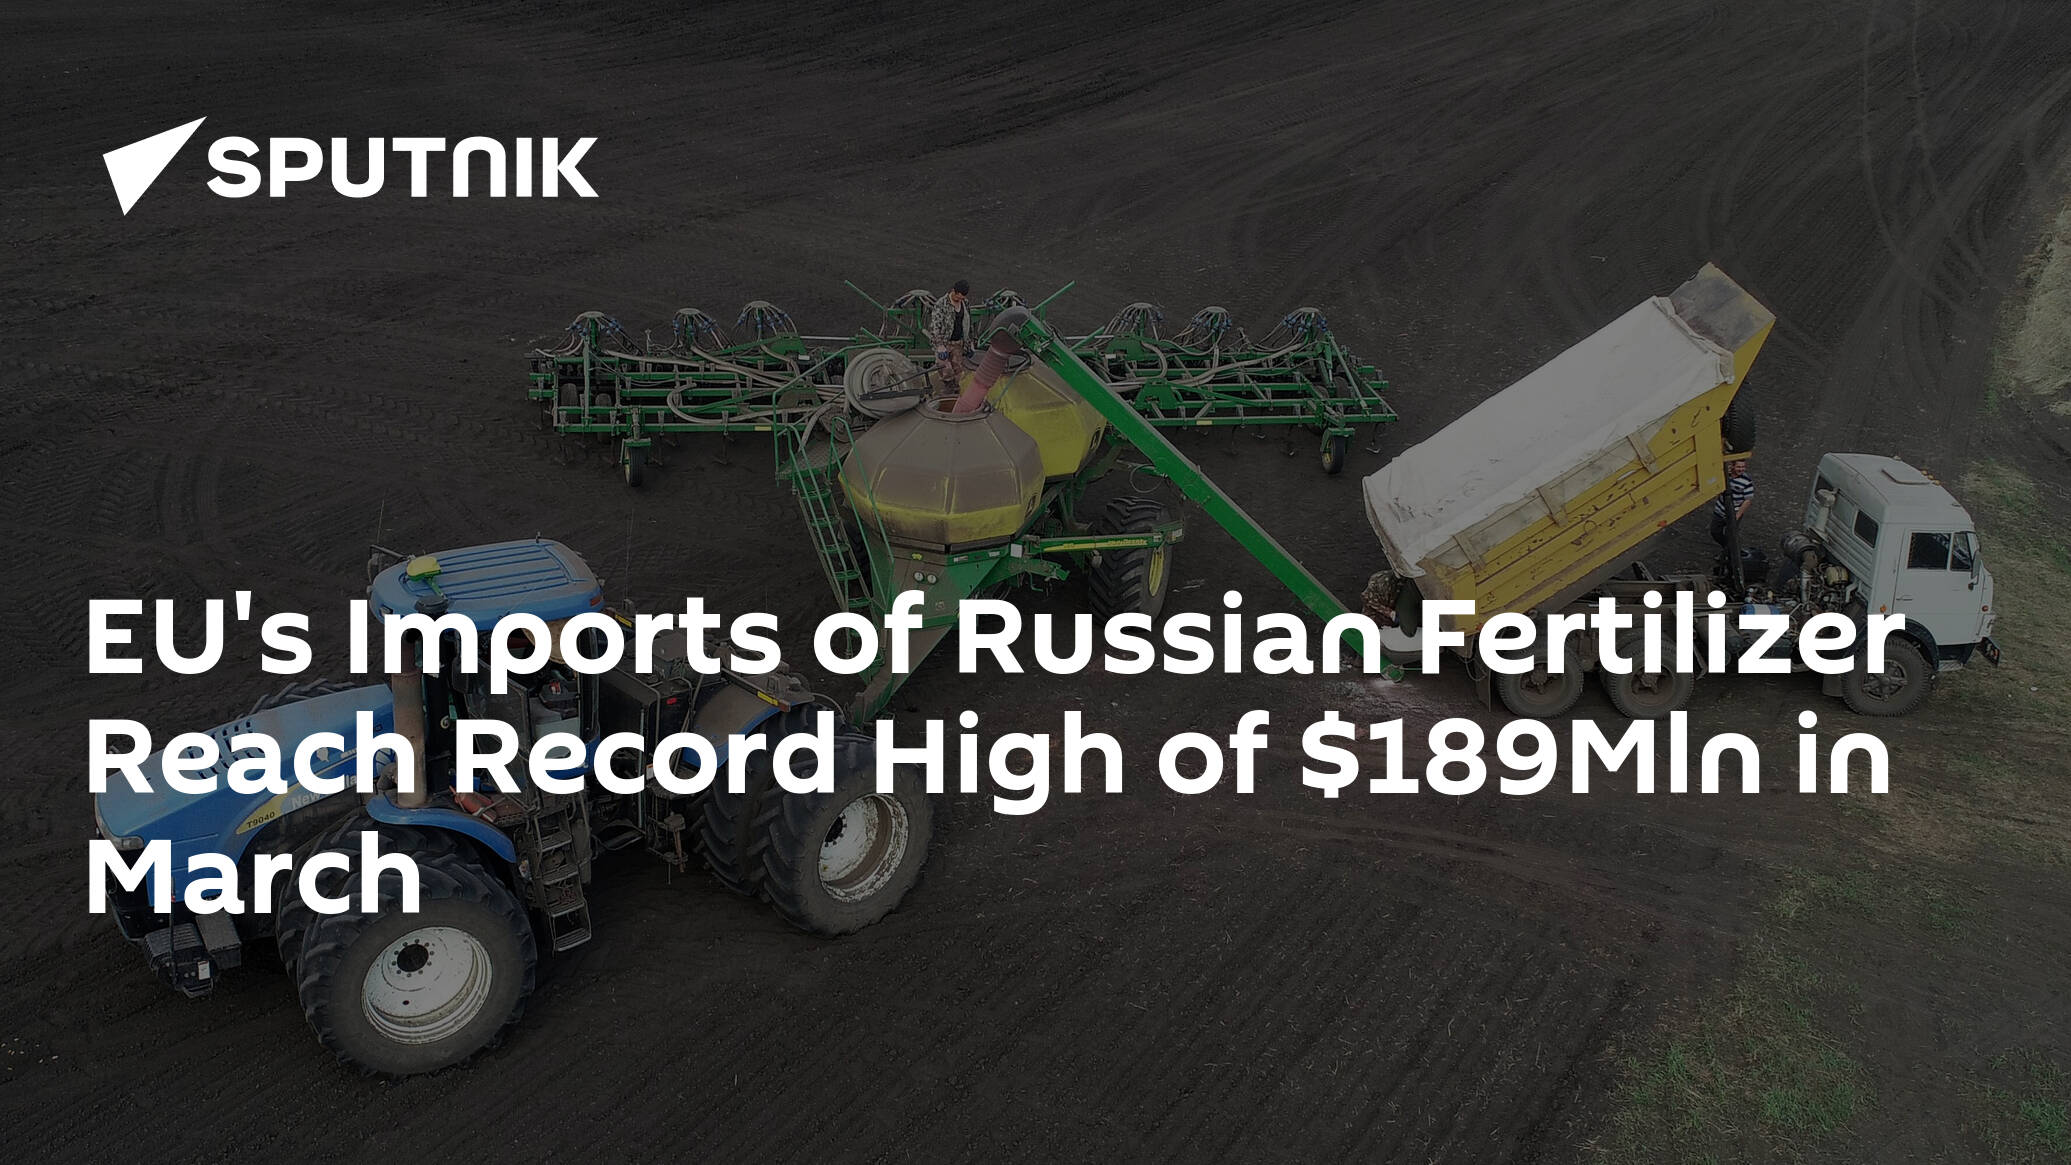 EU's Imports of Russian Fertilizer Reach Record High of 9Mln in March